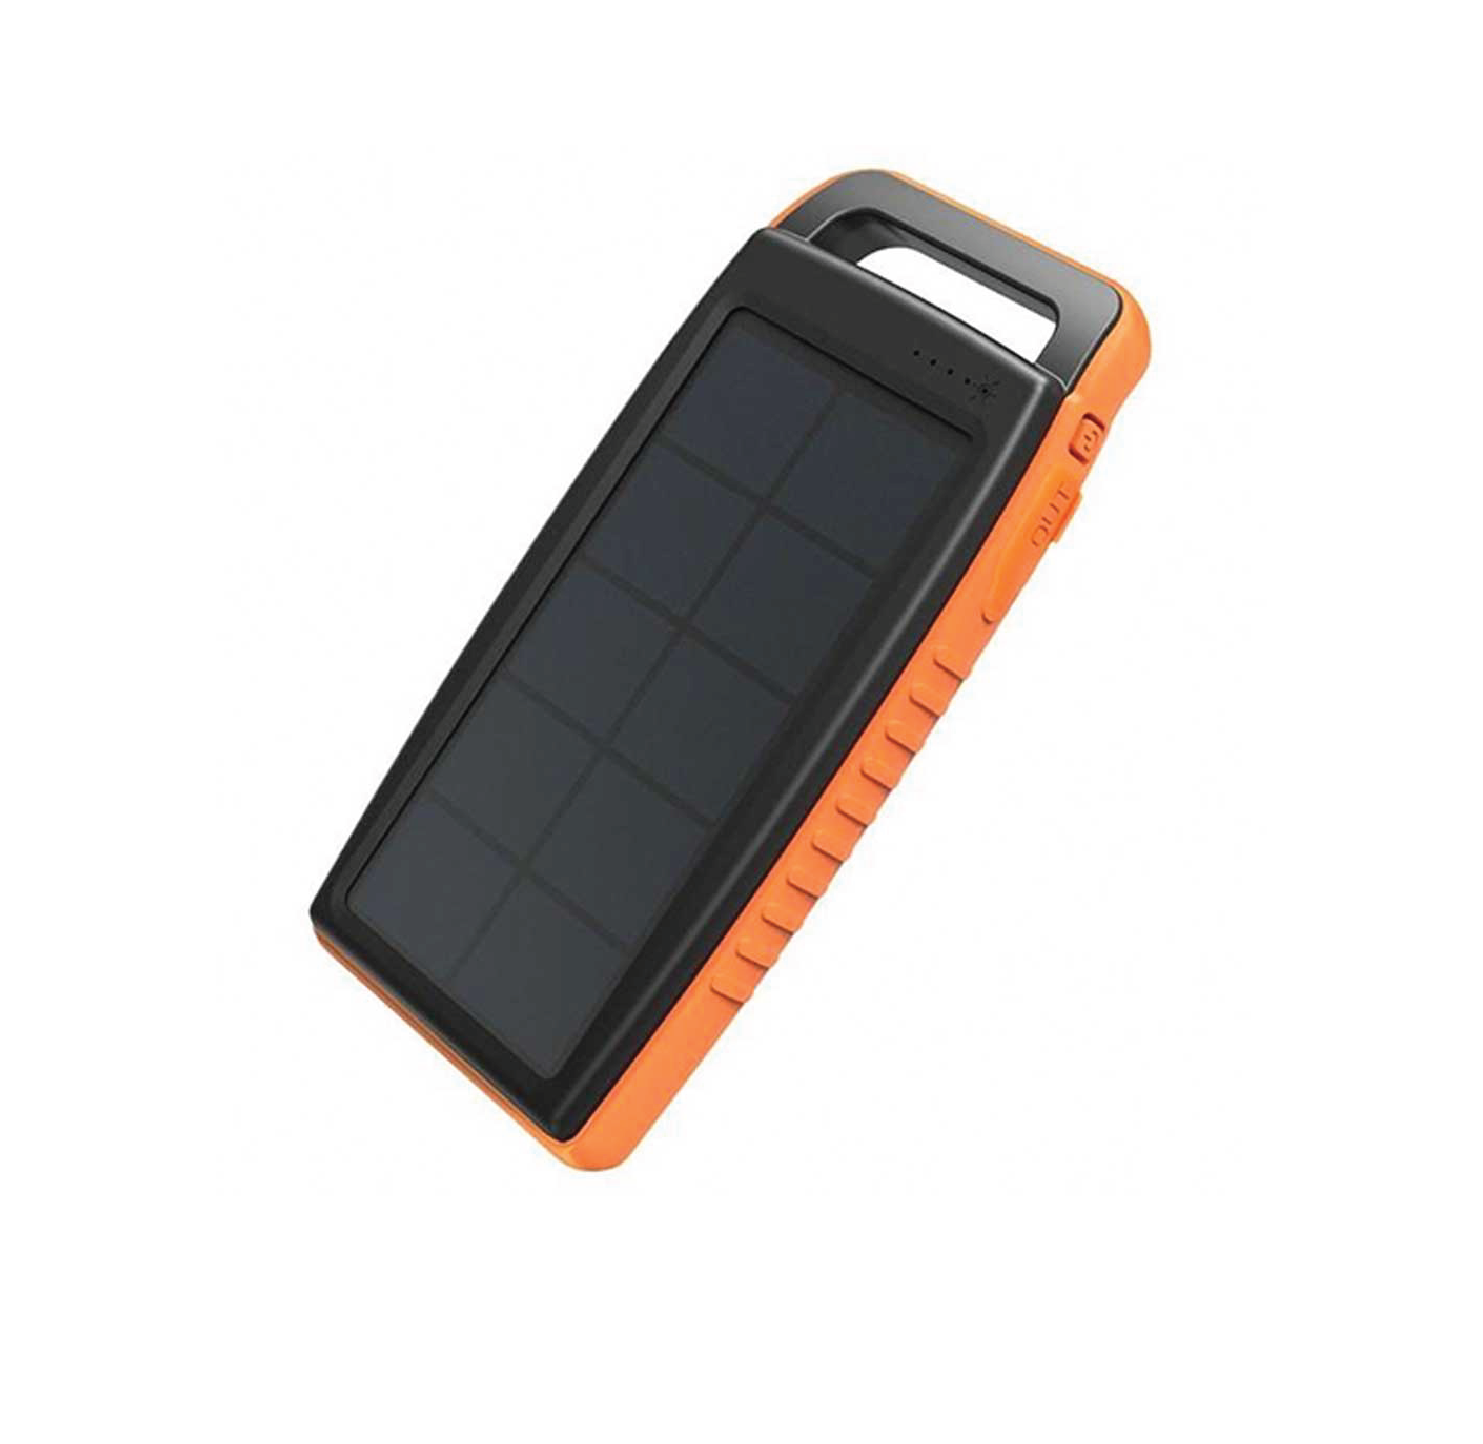 شارژر همراه خورشیدی راو پاور مدل RP-PB003 ظرفیت 15000 میلی آمپر ساعت thumb 233